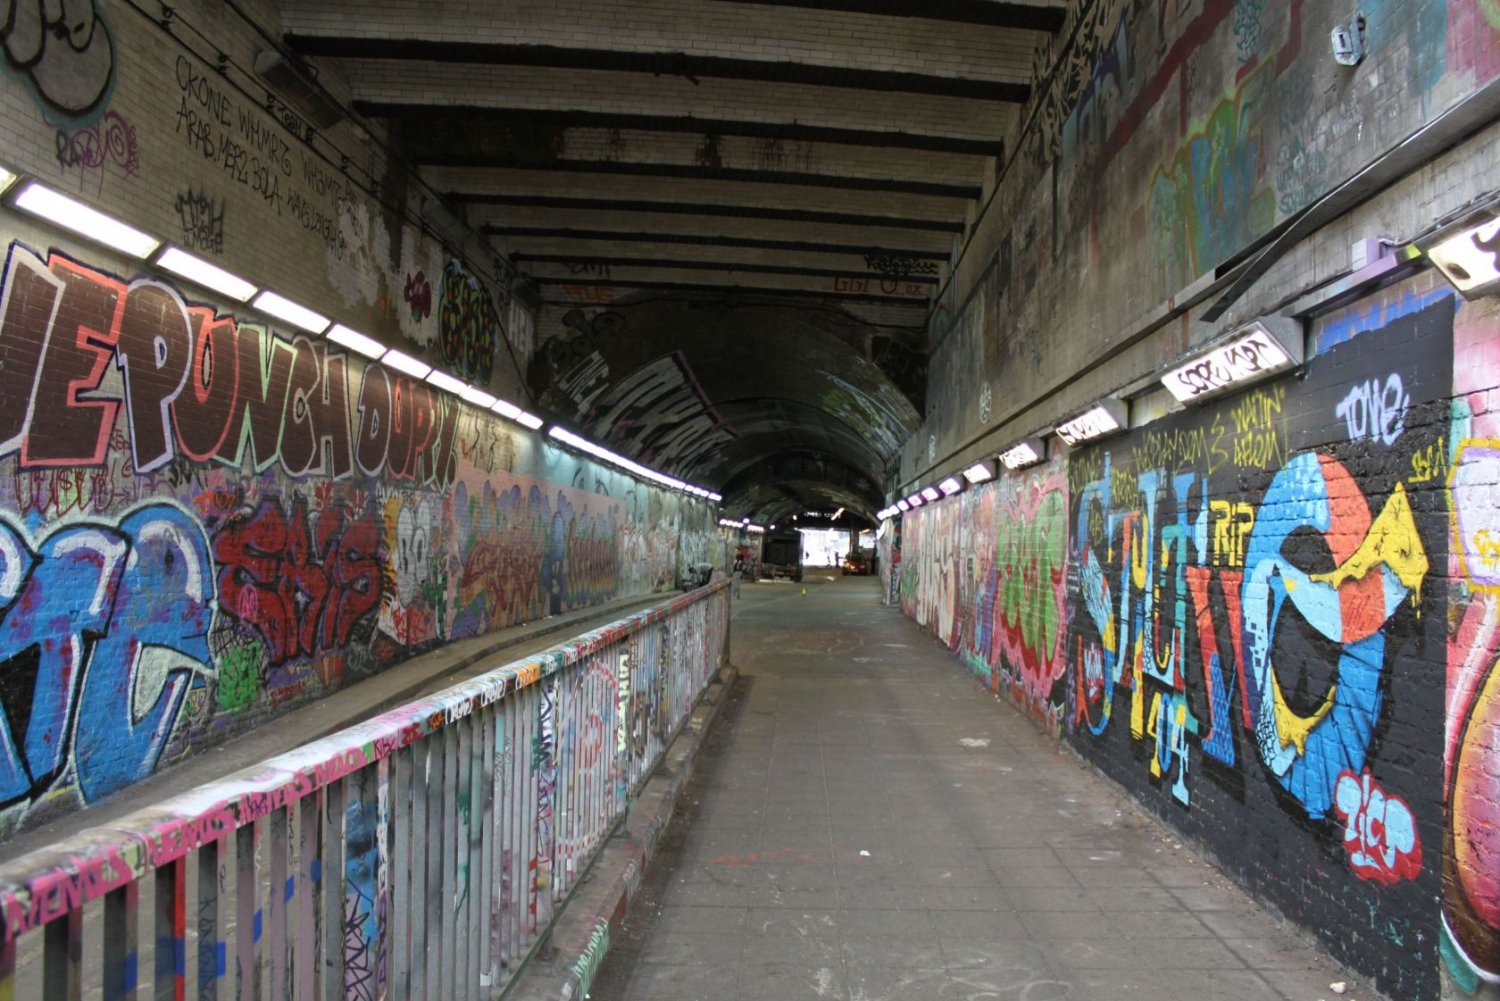 Old Vic graffiti tunnels (credit: Guy Arnold)